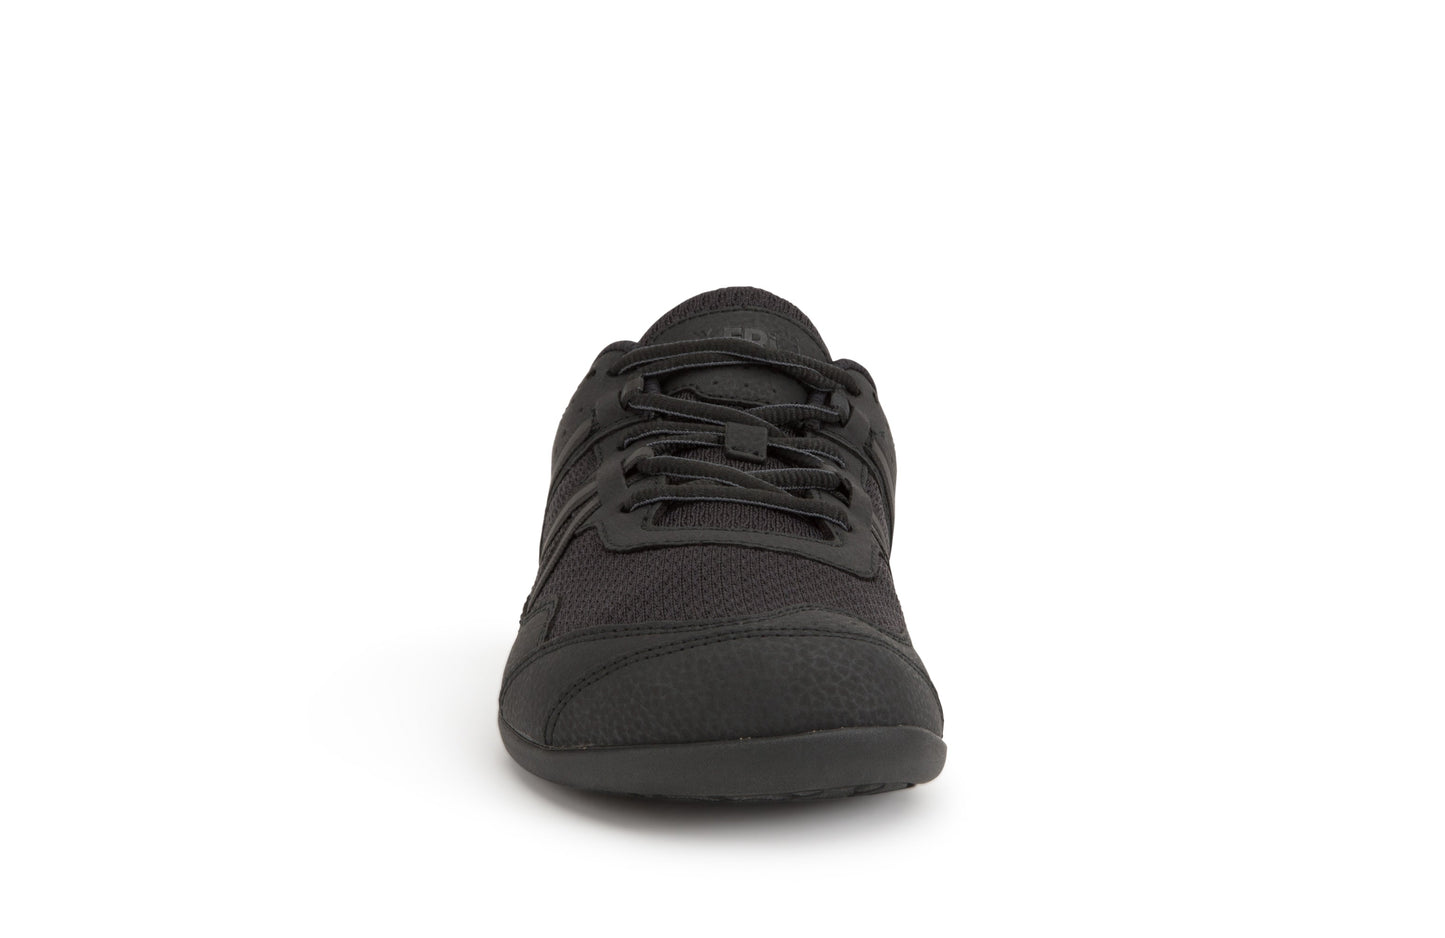 Xero Shoes Prio Womens barfods træningssko til kvinder i farven black, forfra